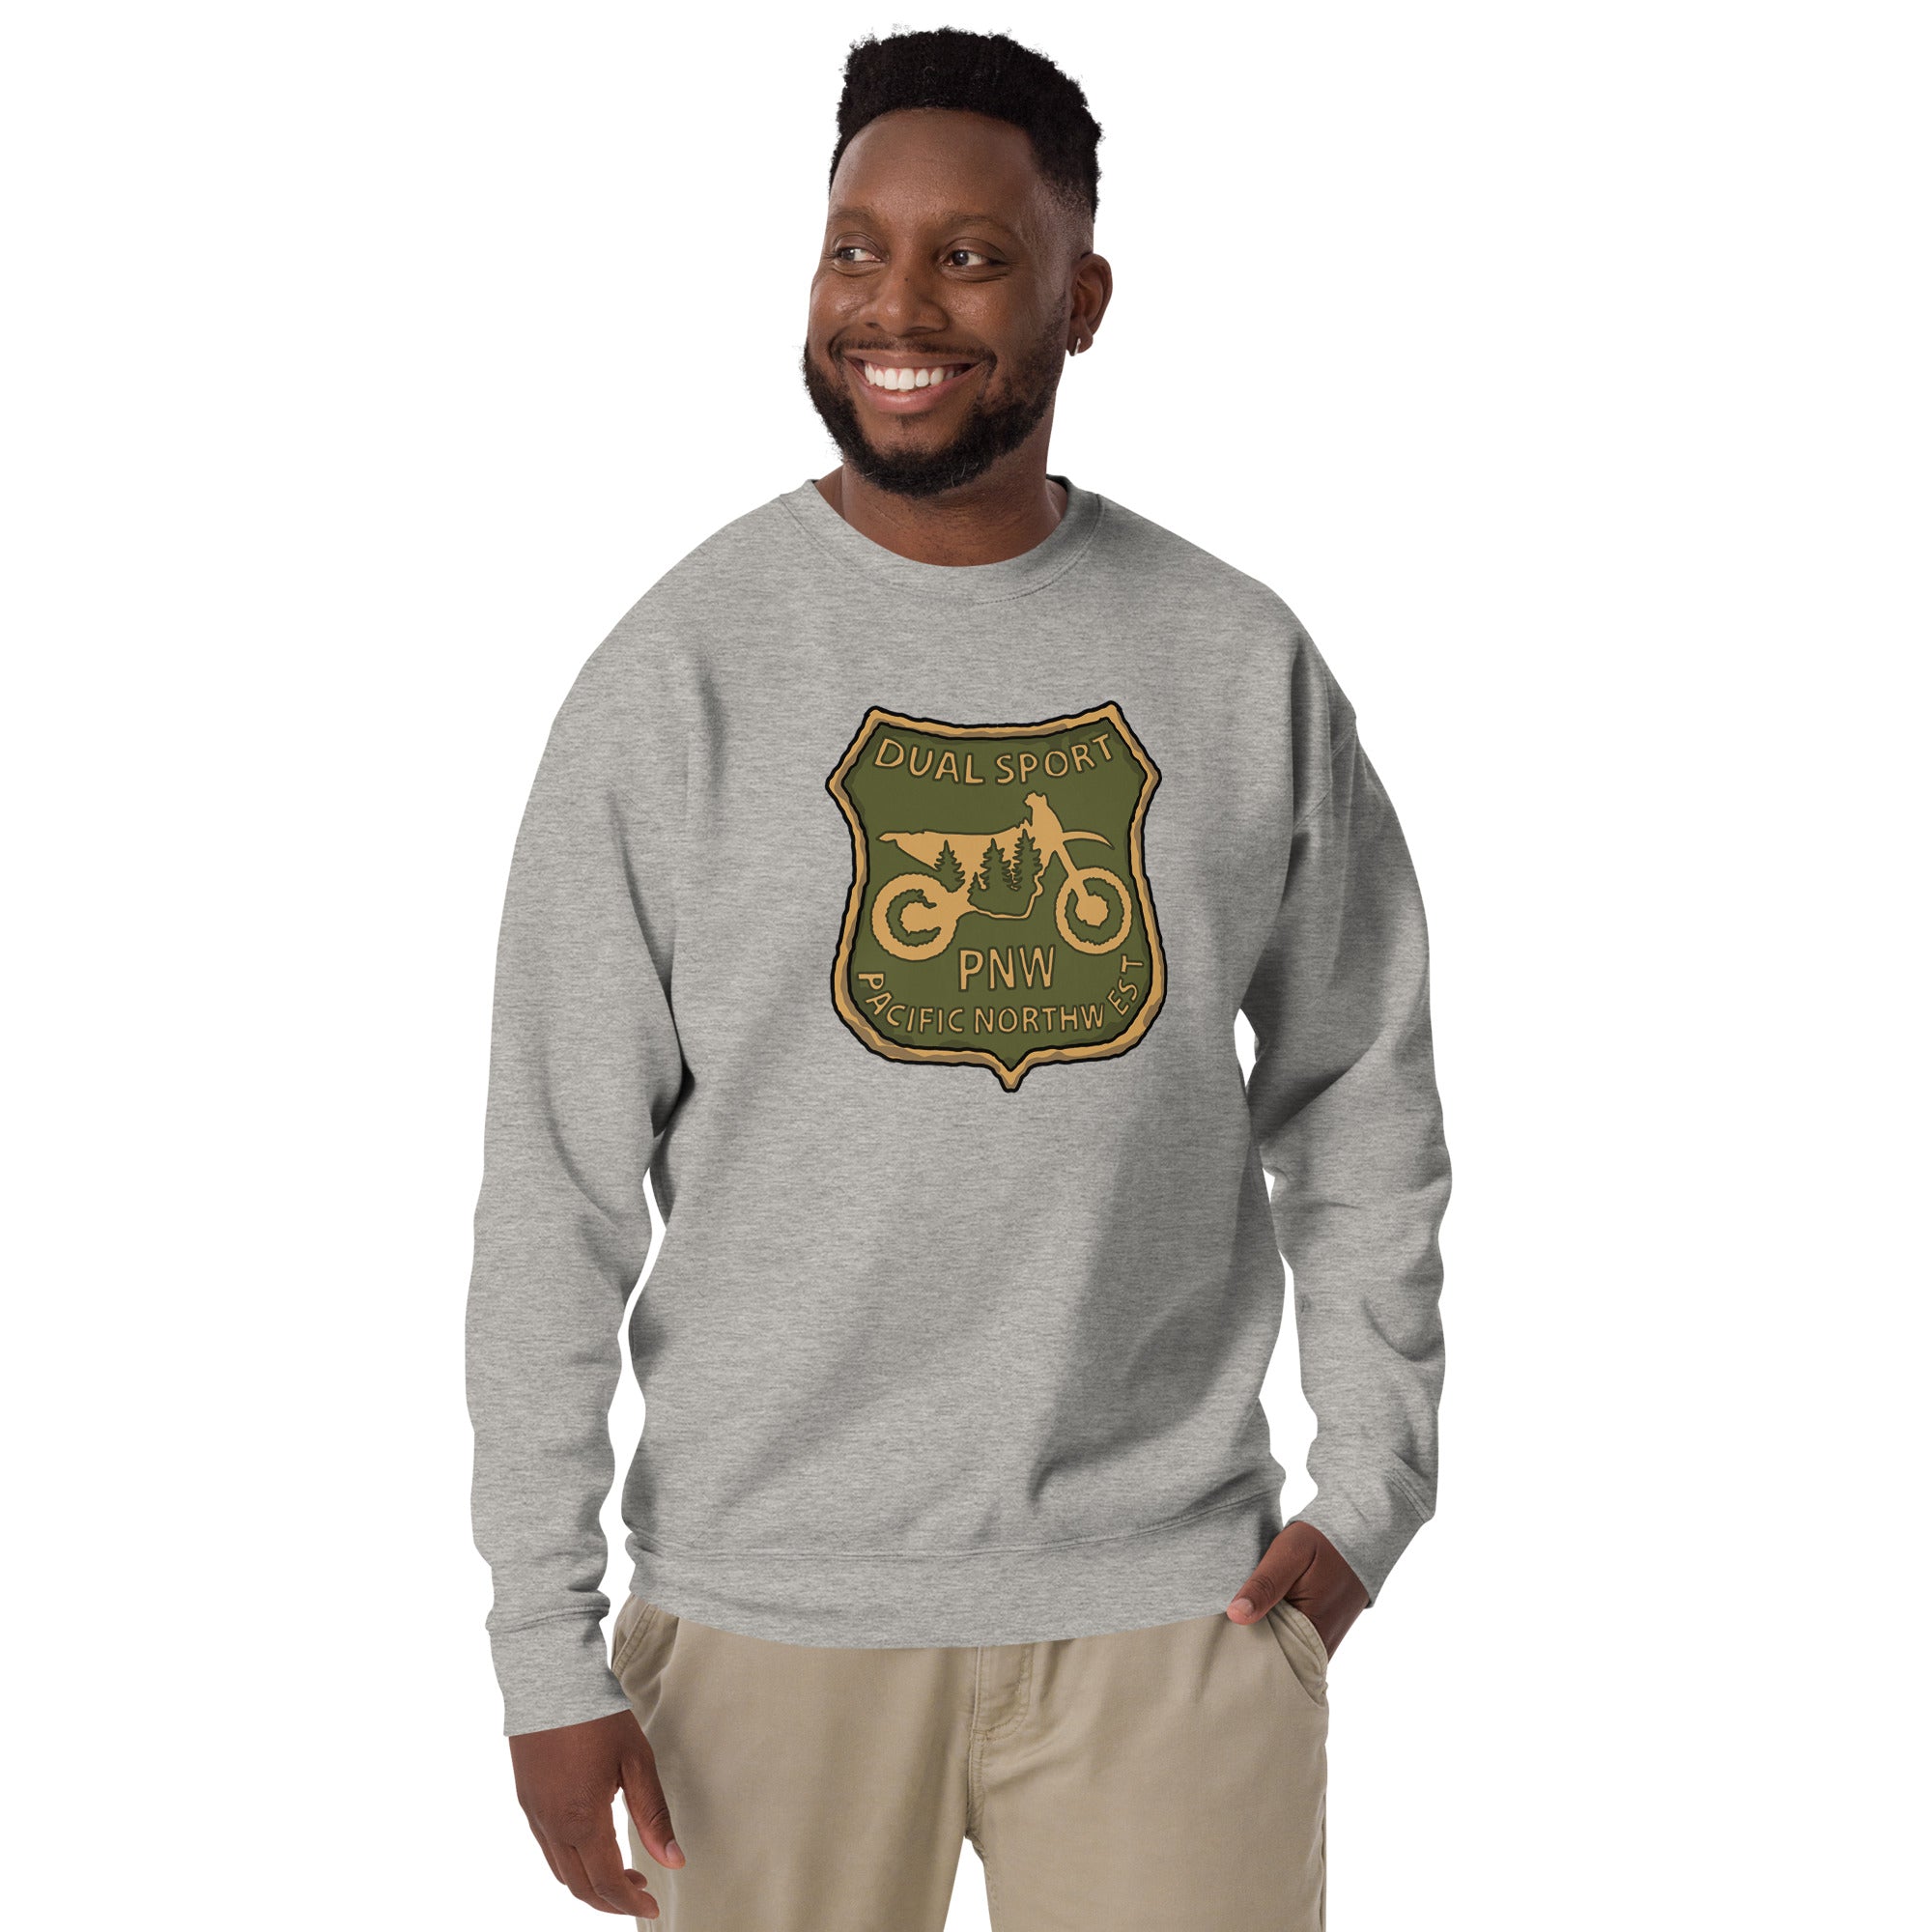 Sketchy Doodle Sweater, Premium